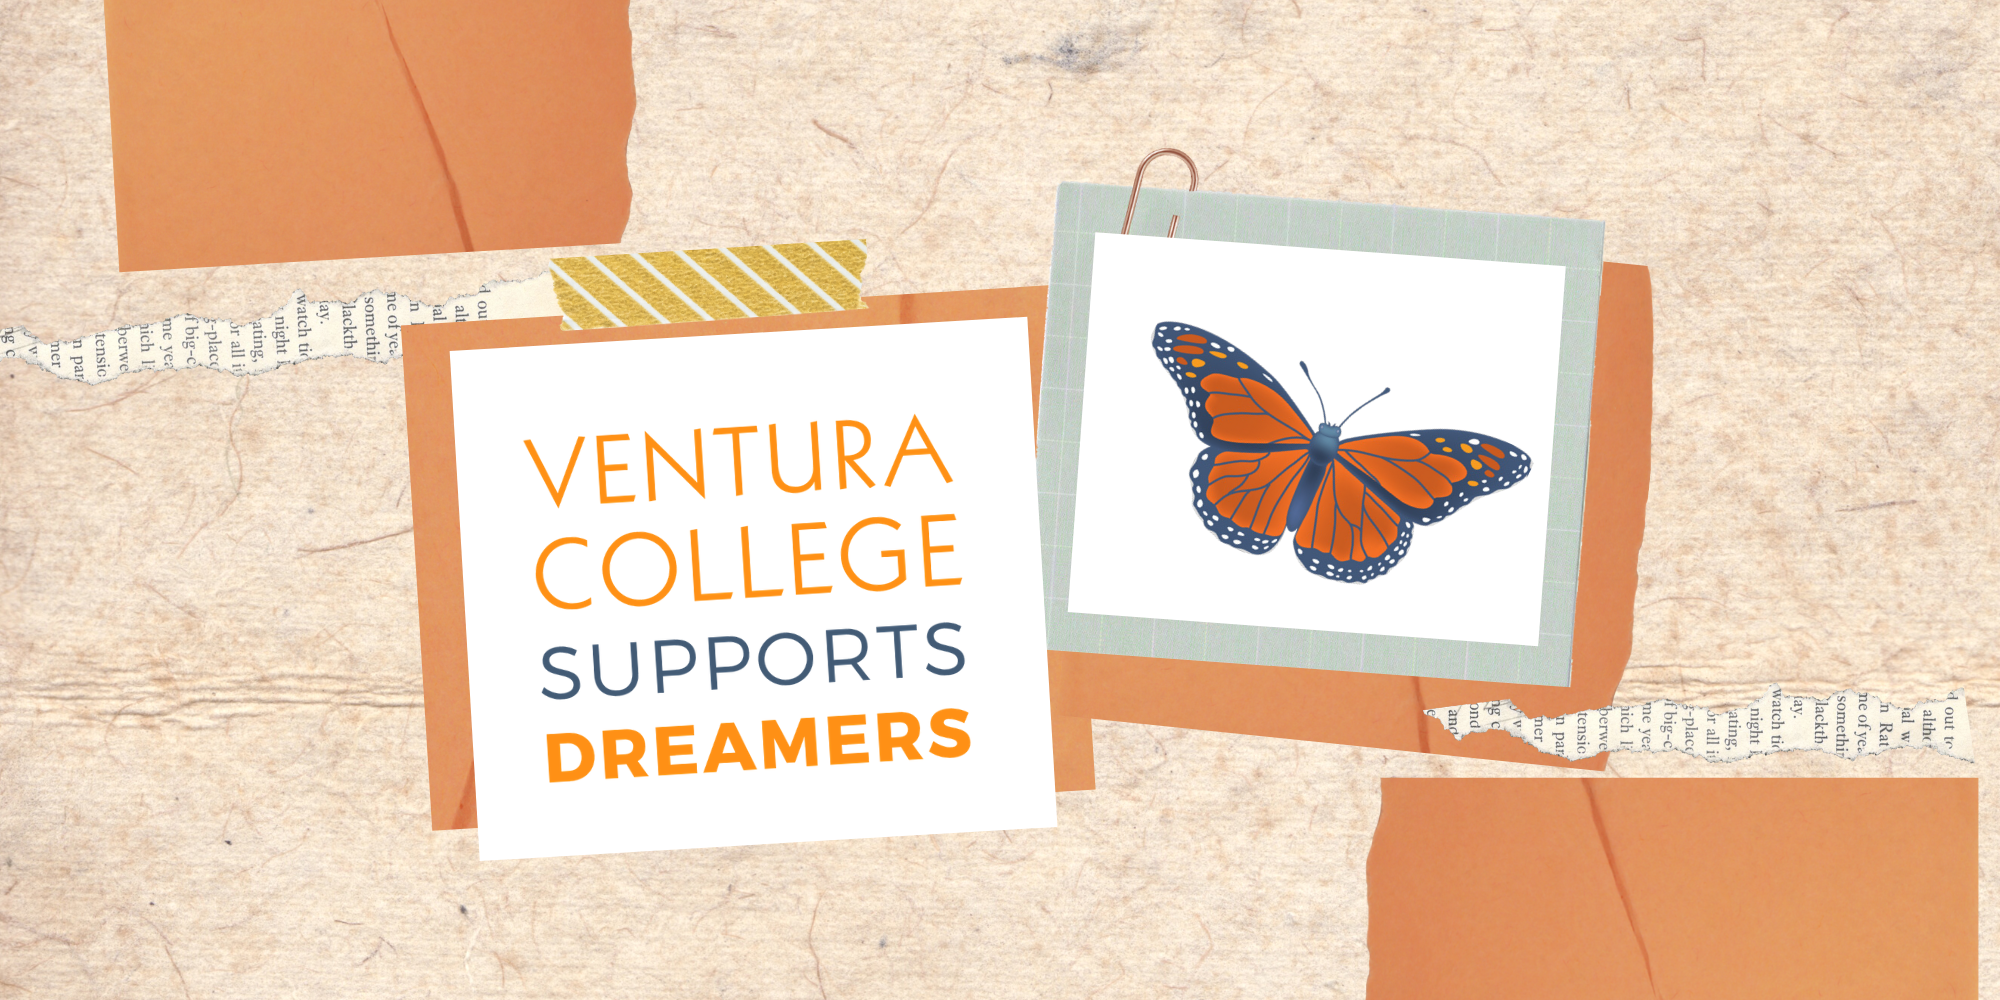 Ventura College supports Dreamers